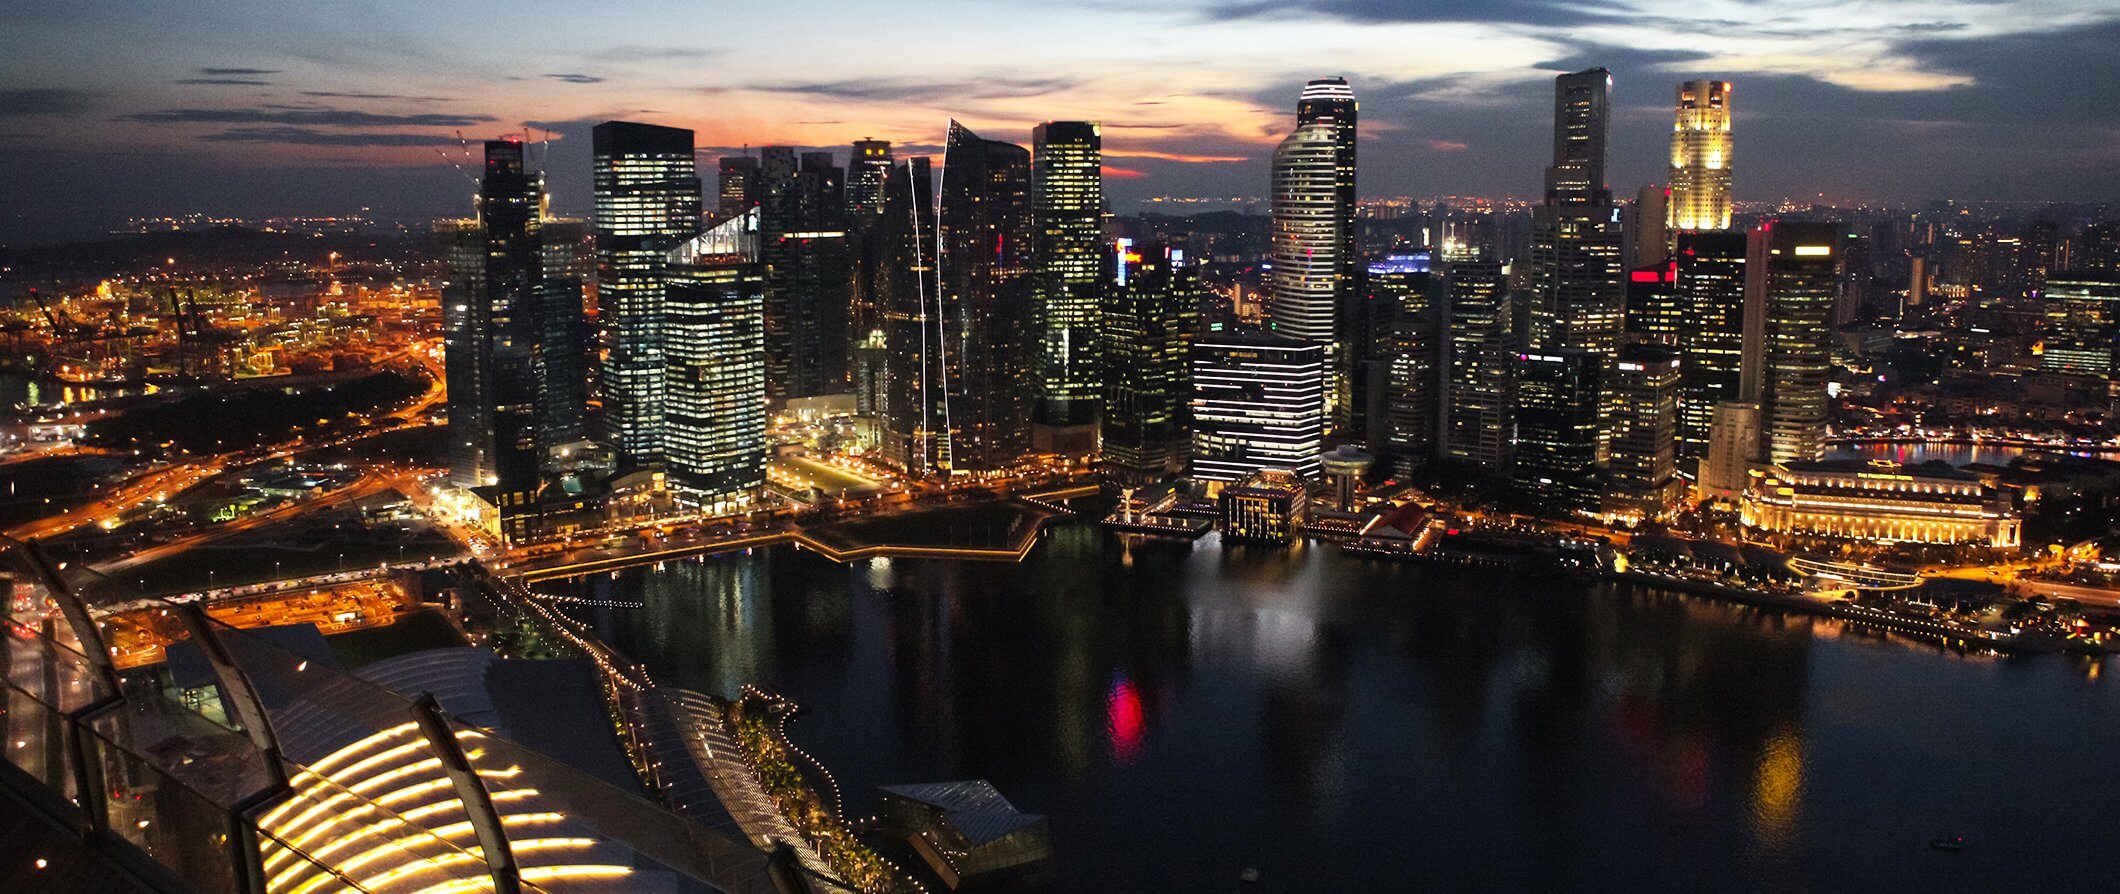 The Singapore skyline lit up at night